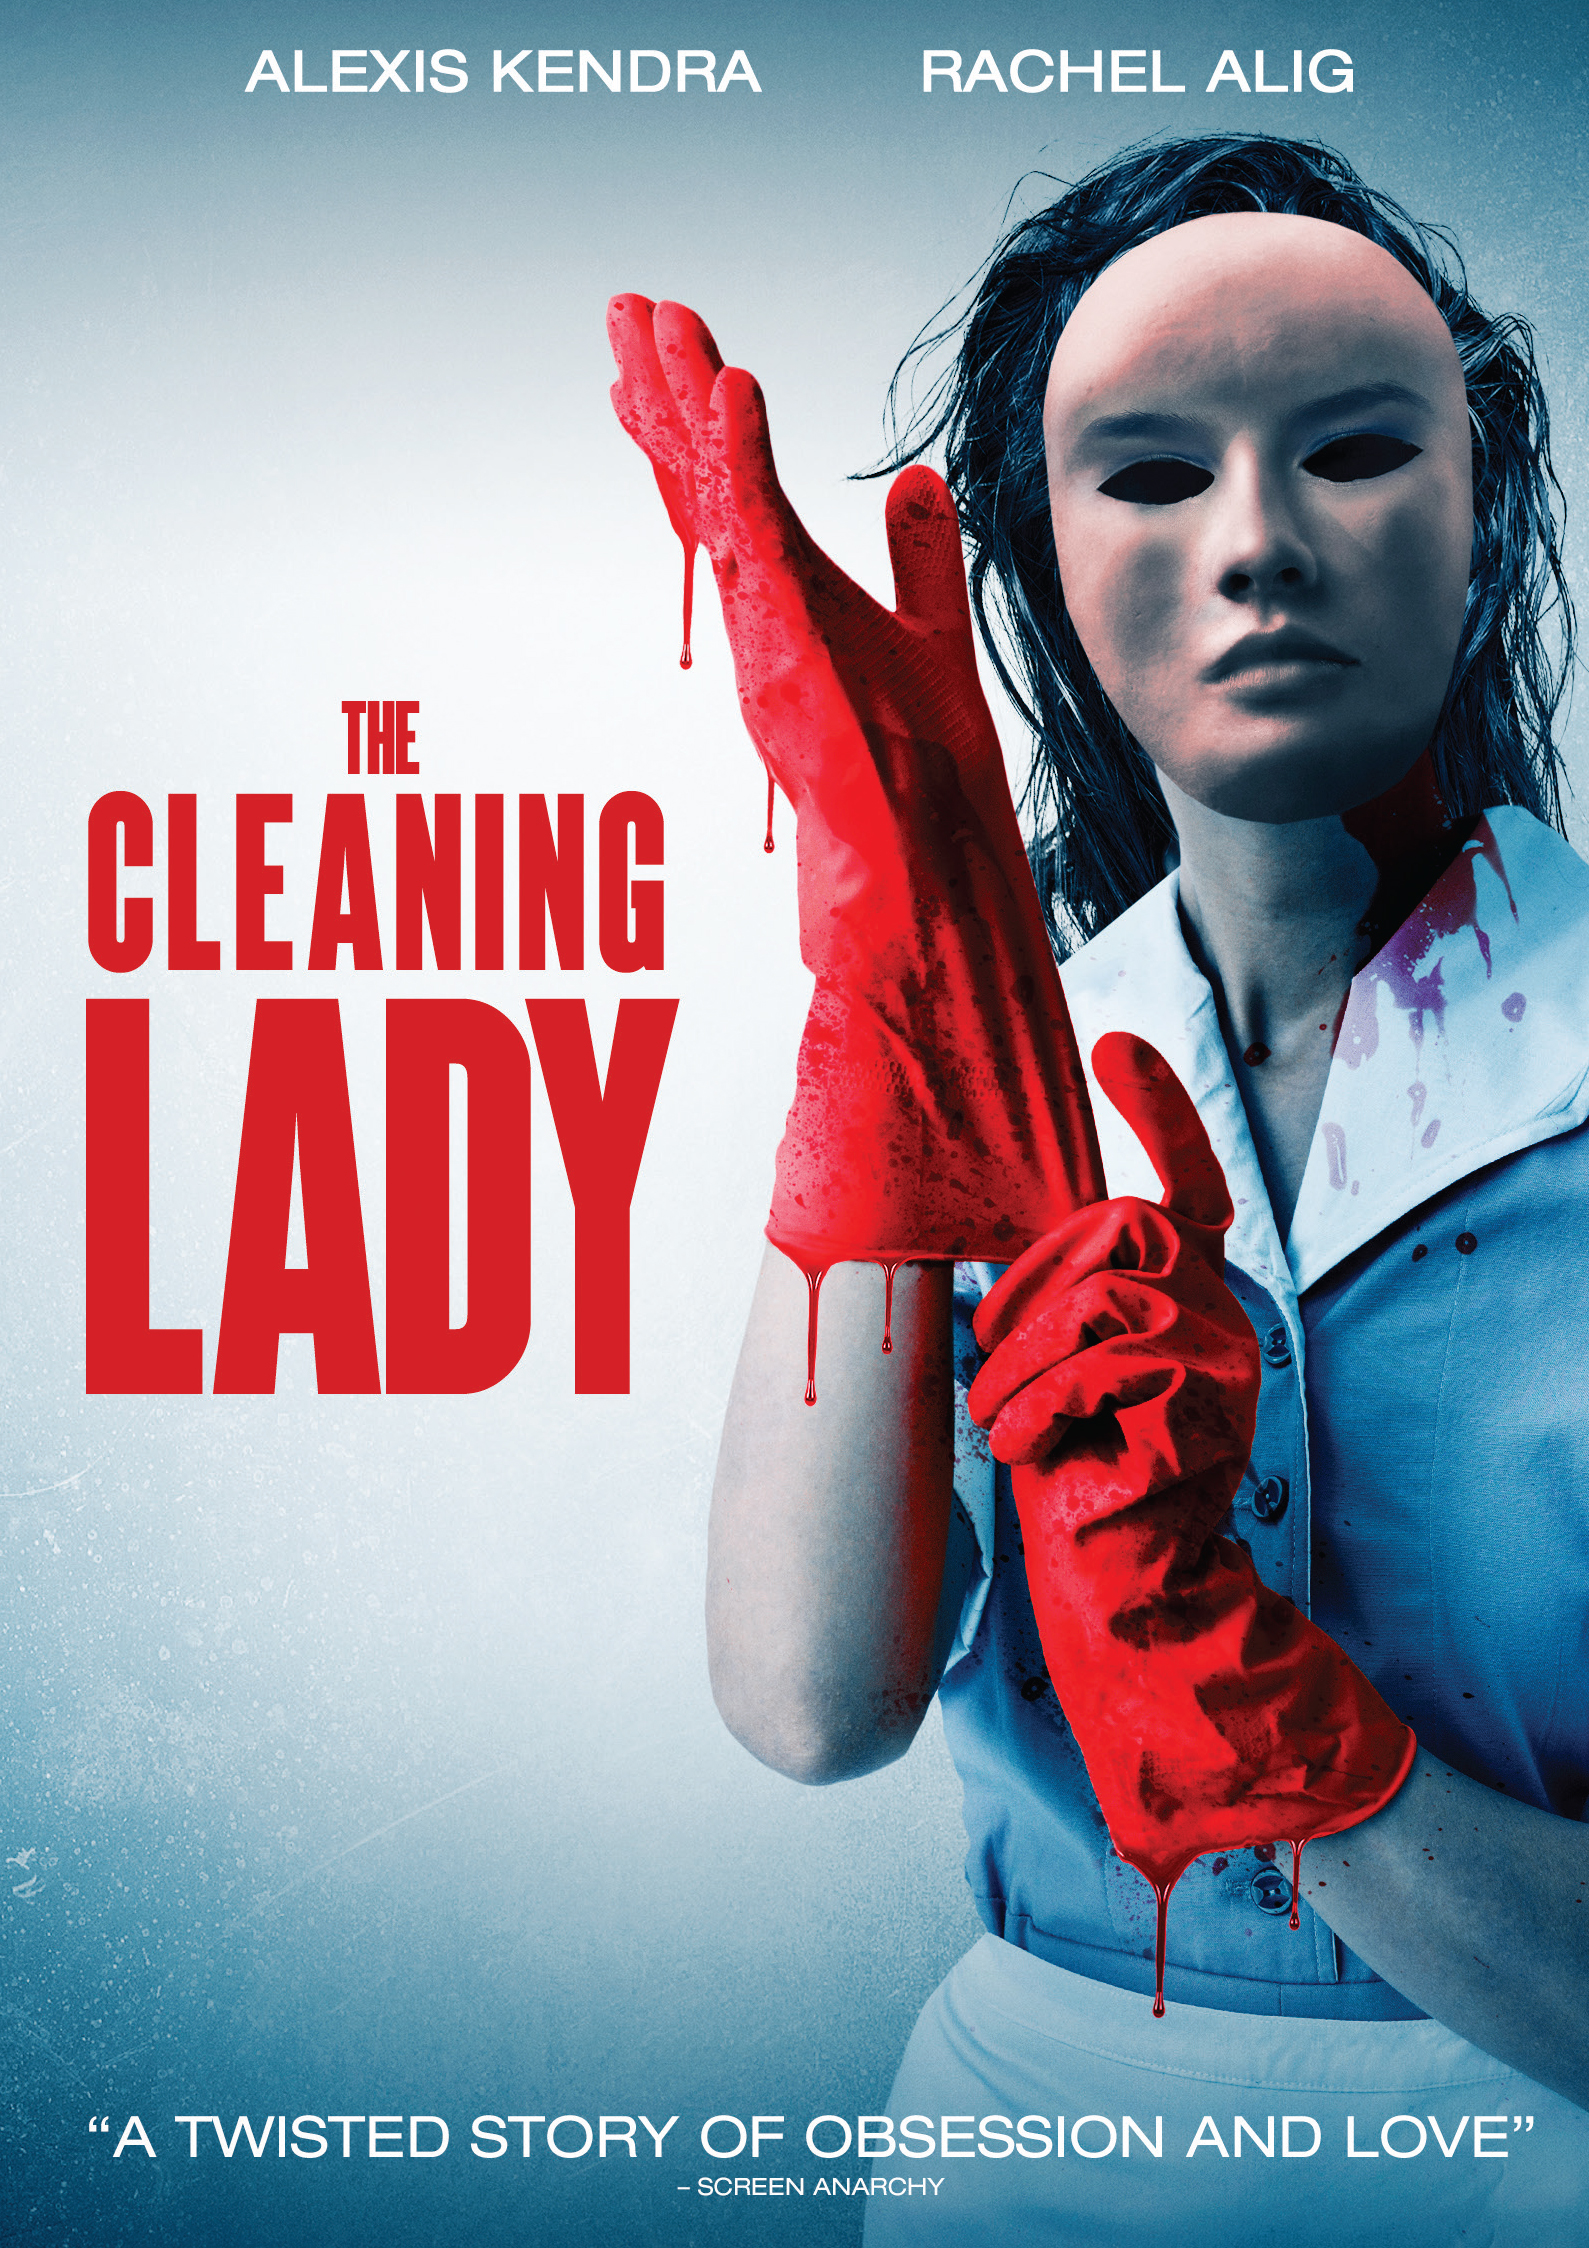 Nonton film The Cleaning Lady layarkaca21 indoxx1 ganool online streaming terbaru